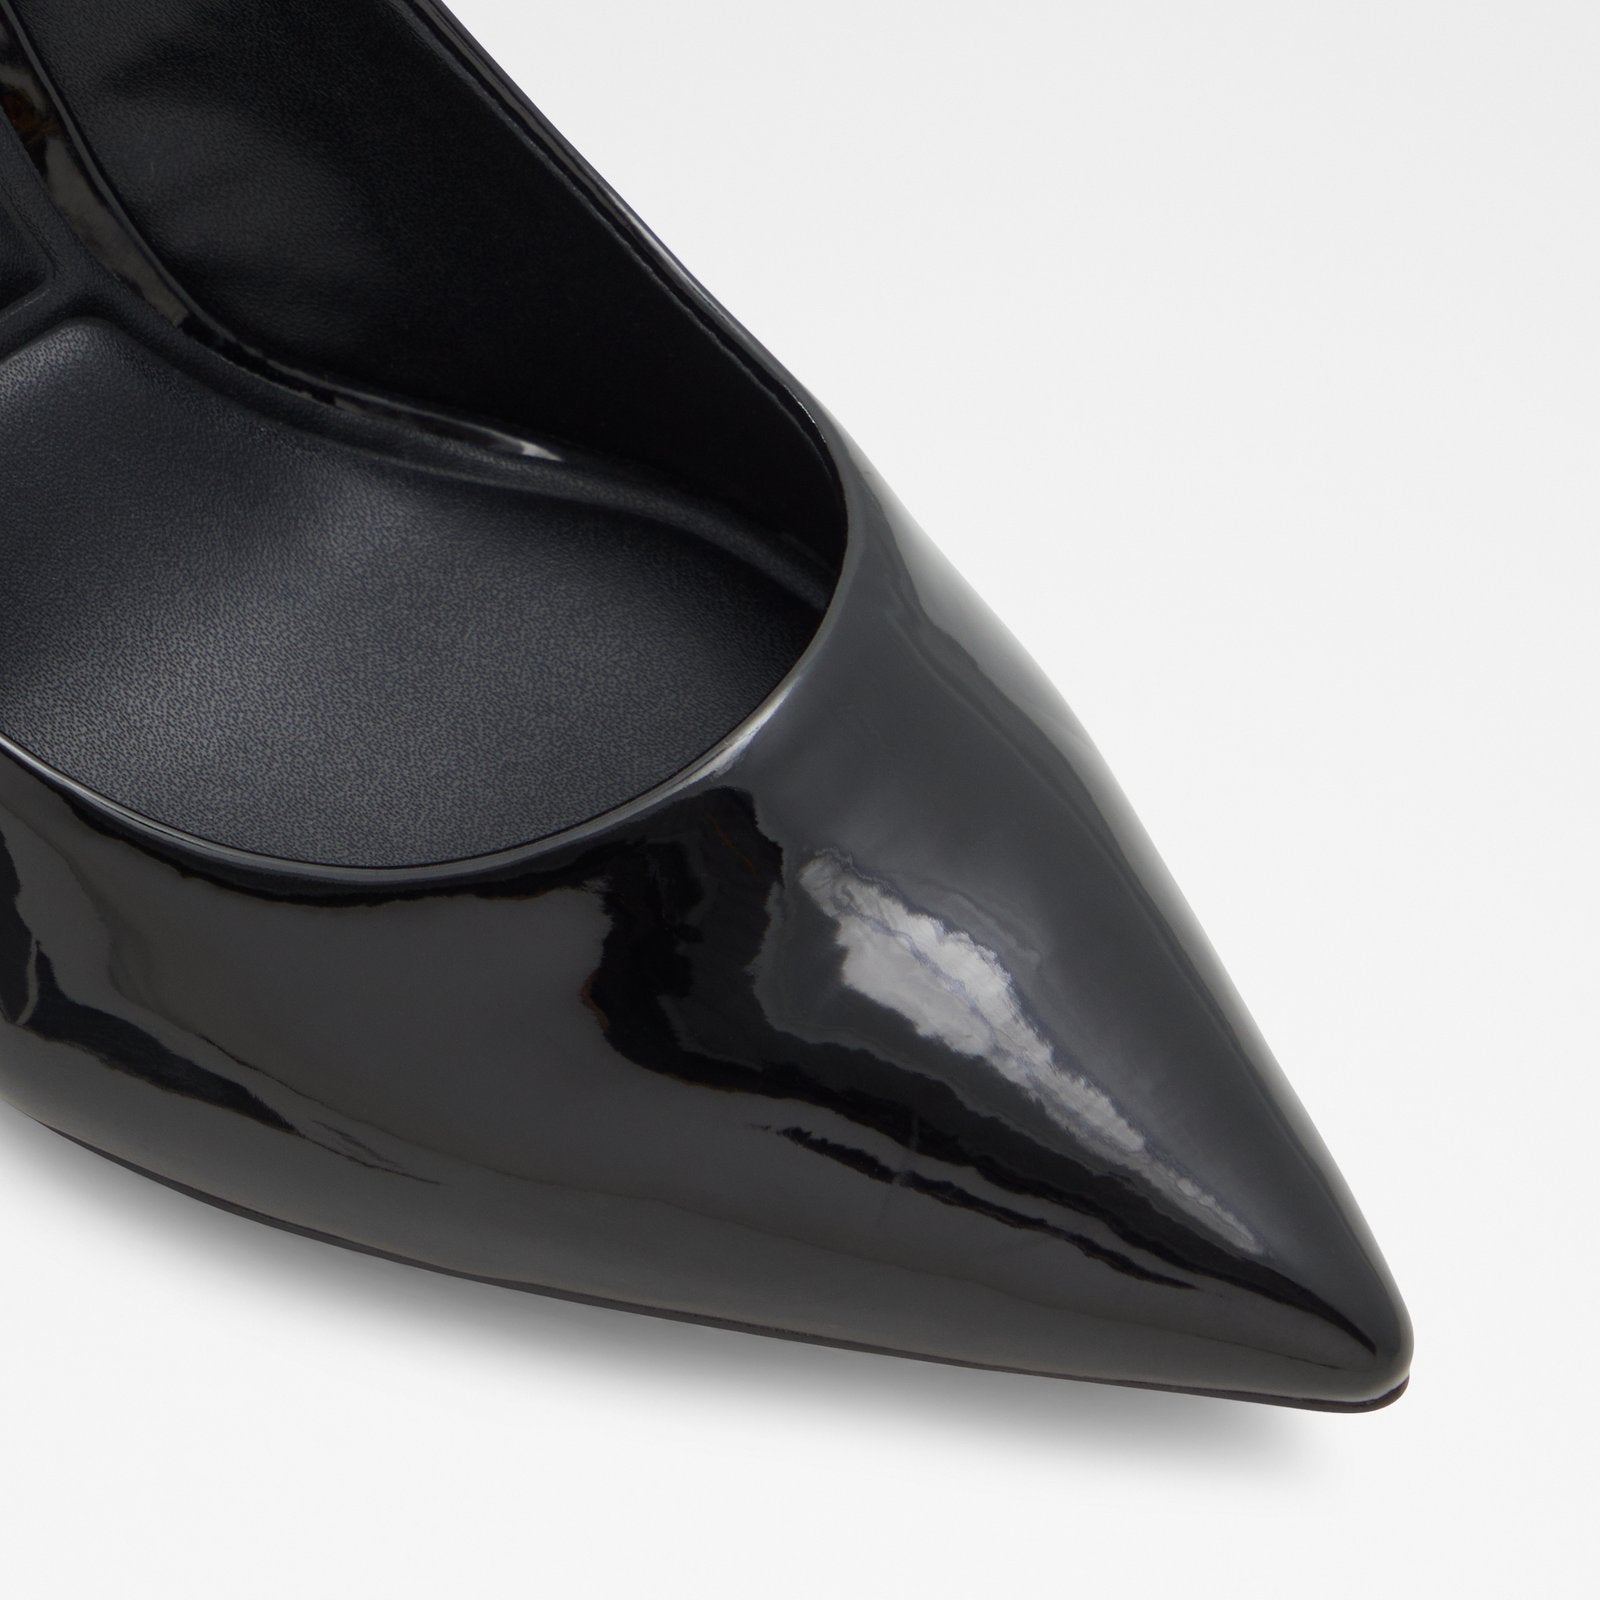 Stessymid / Heeled Women Shoes - Black - ALDO KSA